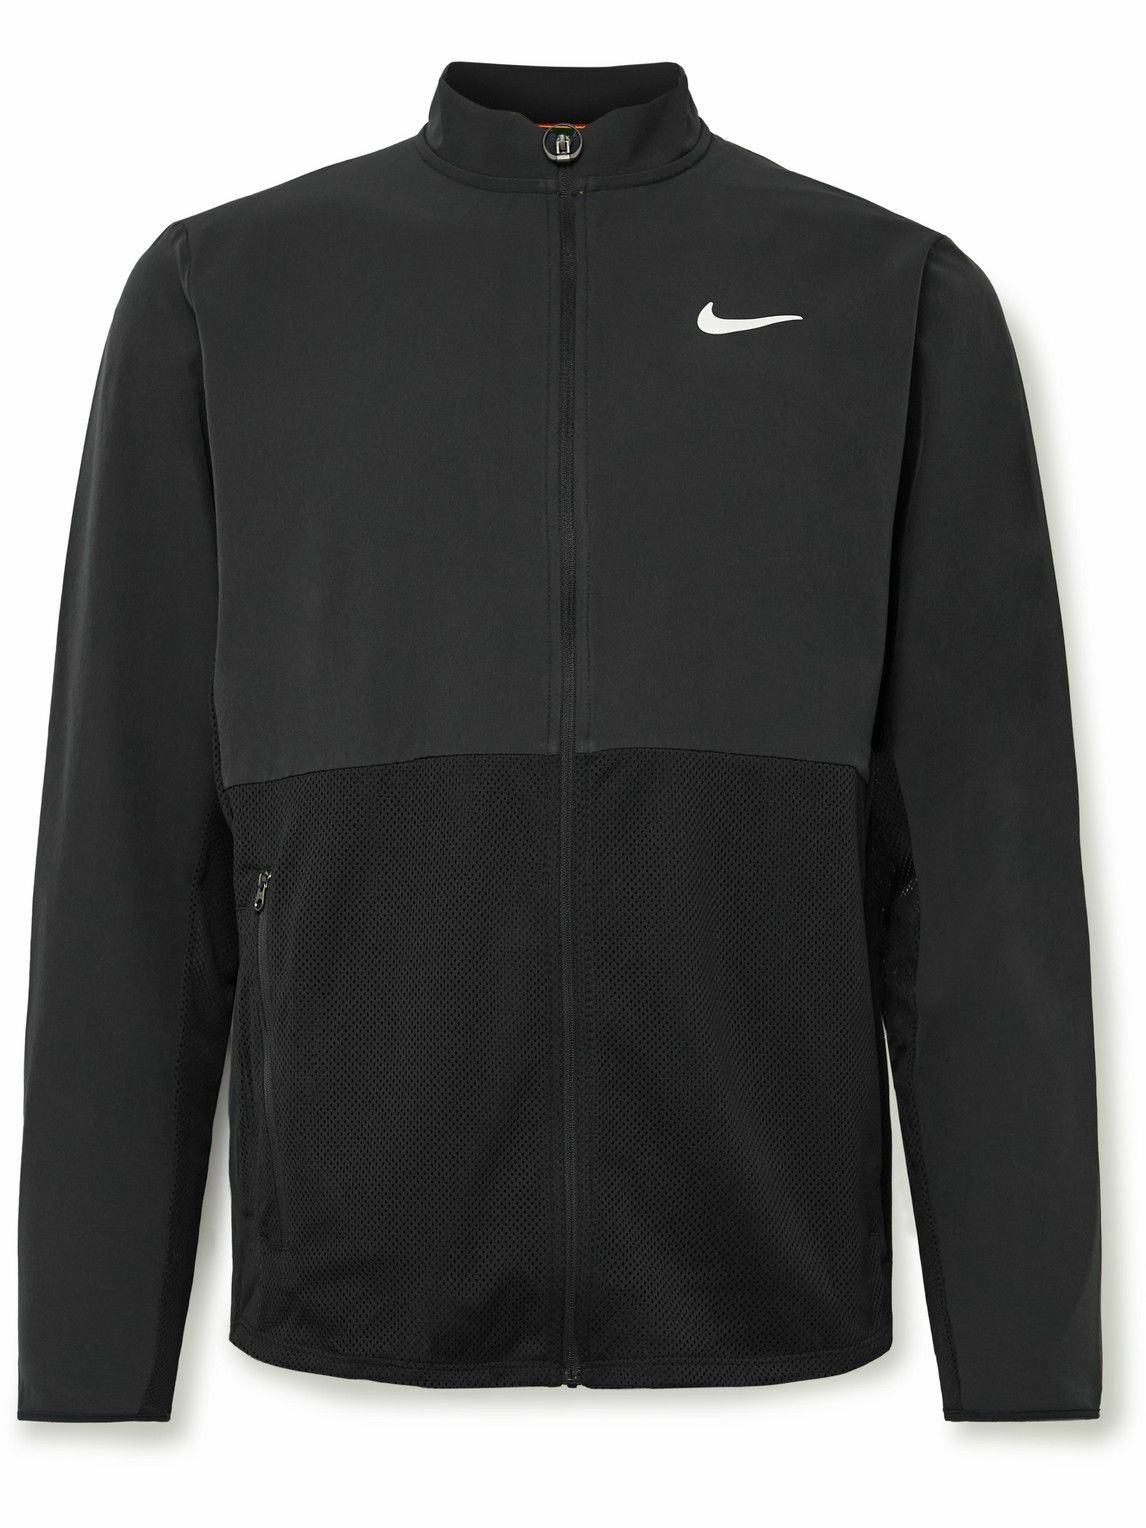 Photo: Nike Tennis - NikeCourt Advantage Mesh and Shell Tennis Jacket - Black